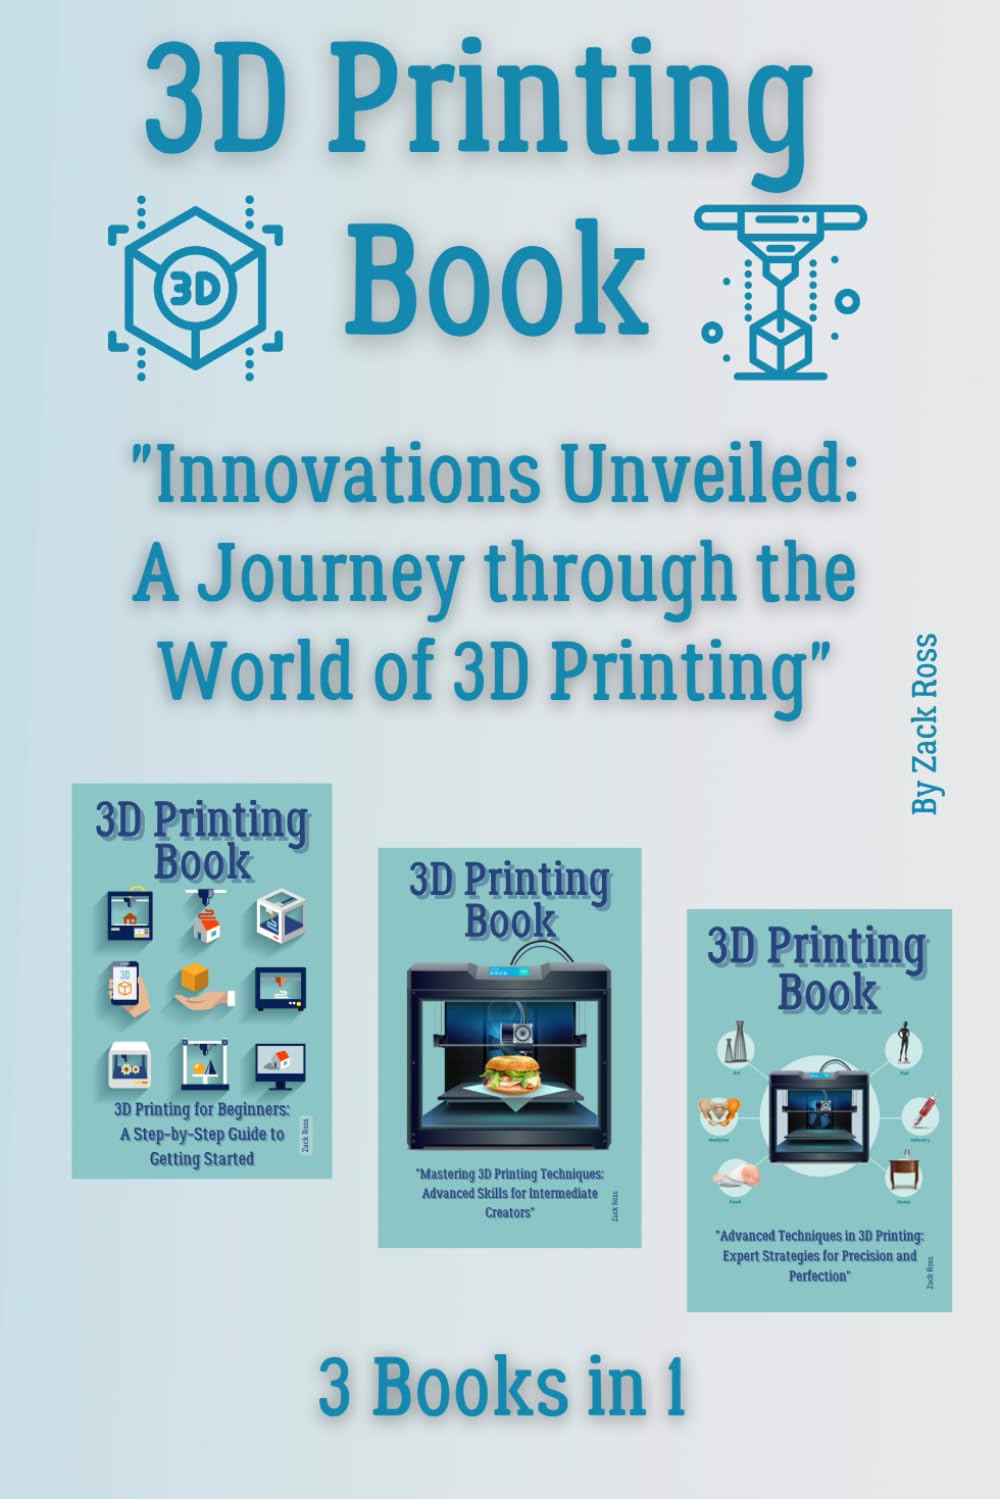 3D Printing Book: 3 Books in 1 - 